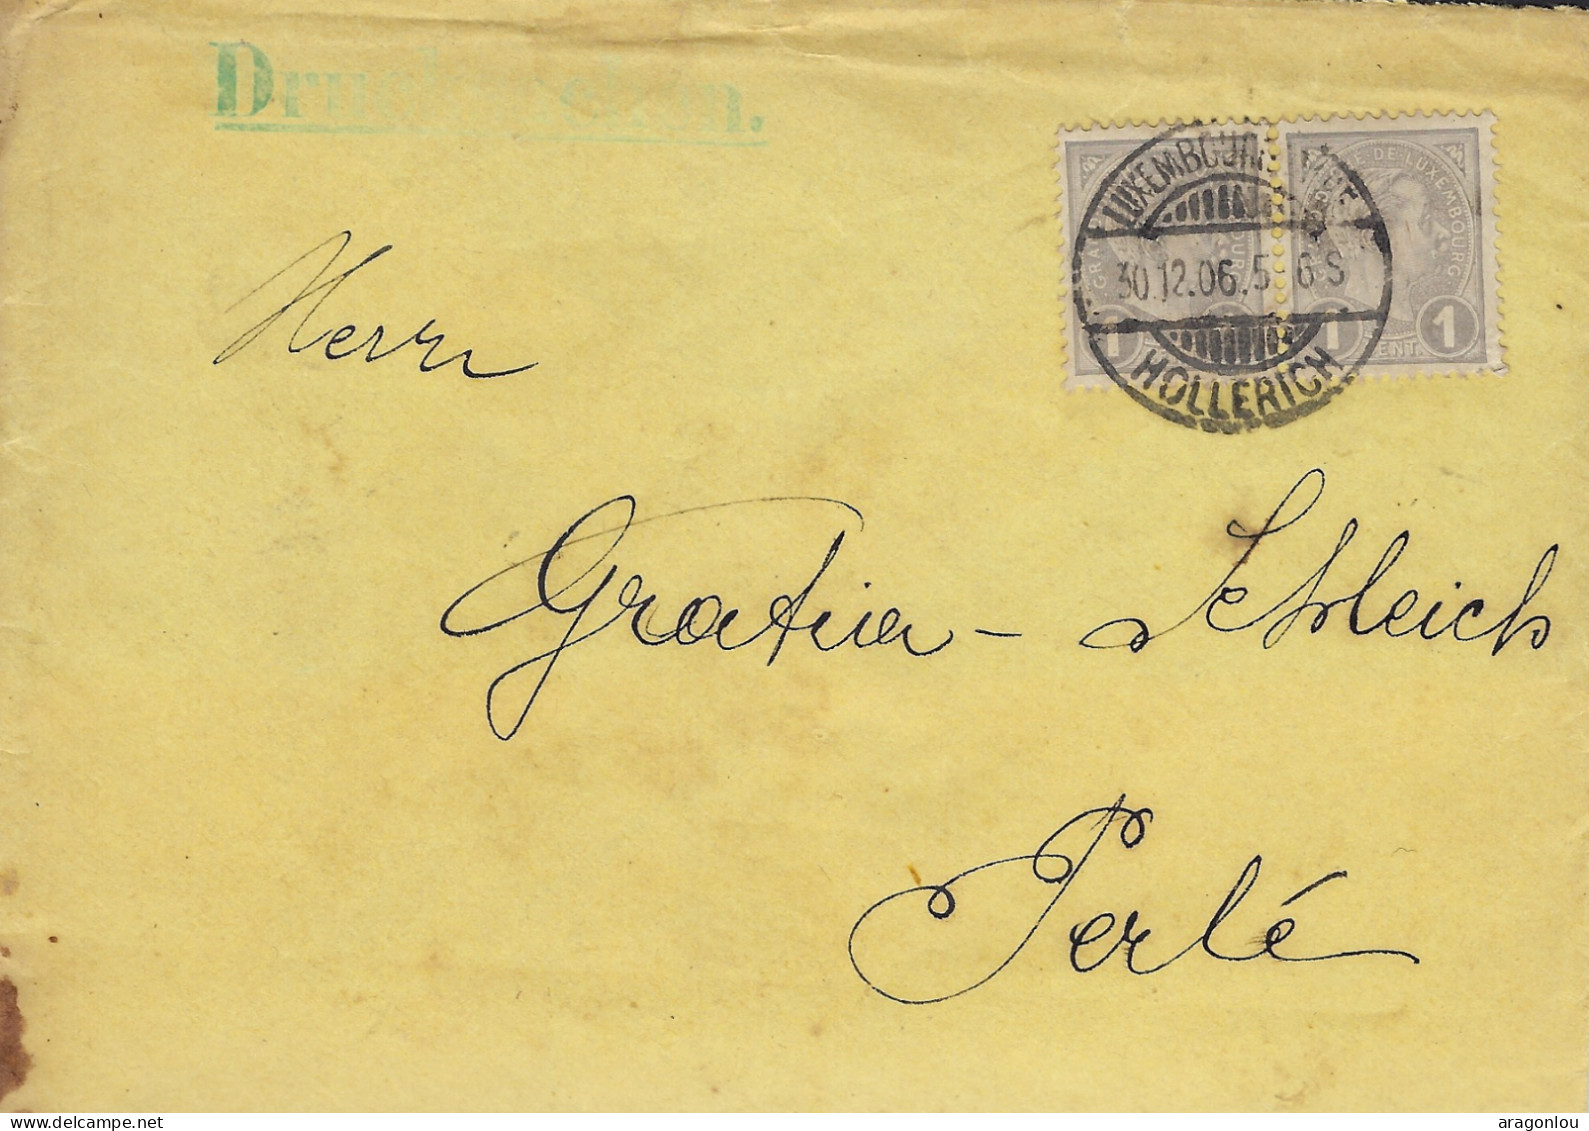 Luxembourg - Luxemburg - Lettre  1906  -  Adressiert An Herrn  GRATIA - SCHLEICH , PERLÉ - Covers & Documents